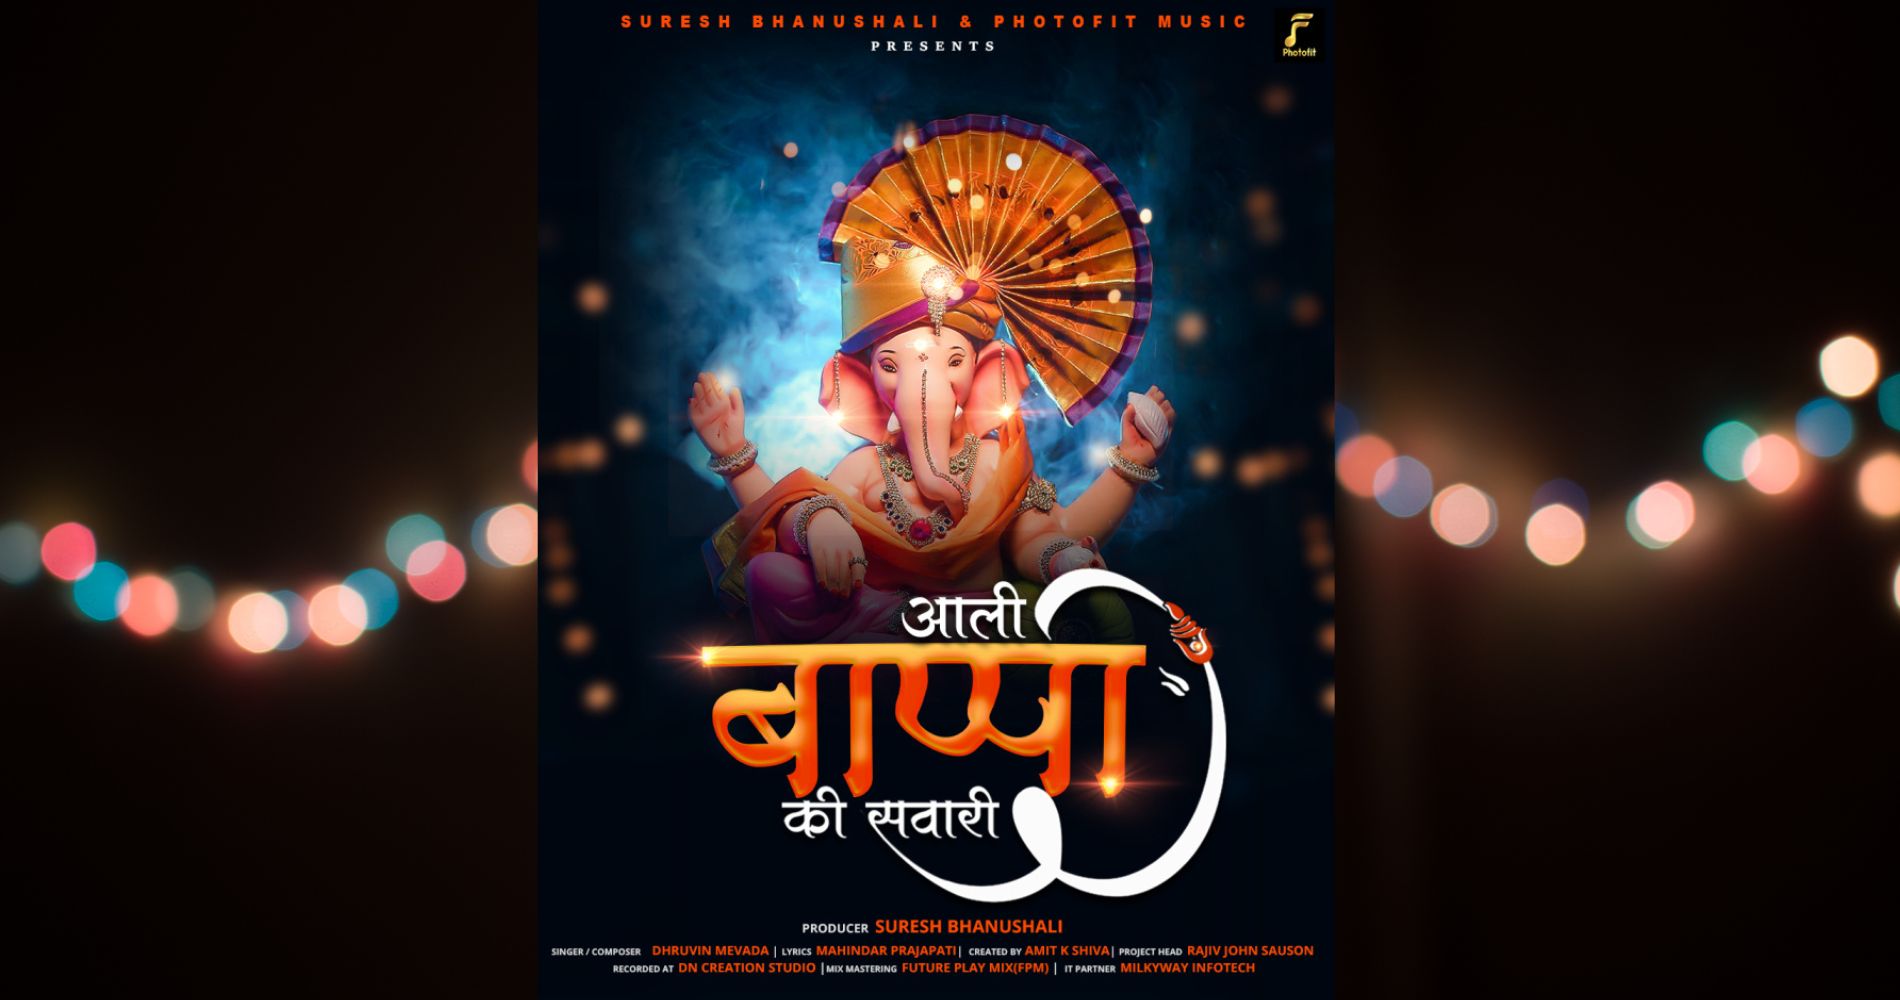 This Ganesh Utsav Producer Suresh Bhanushali and Photofit Music release